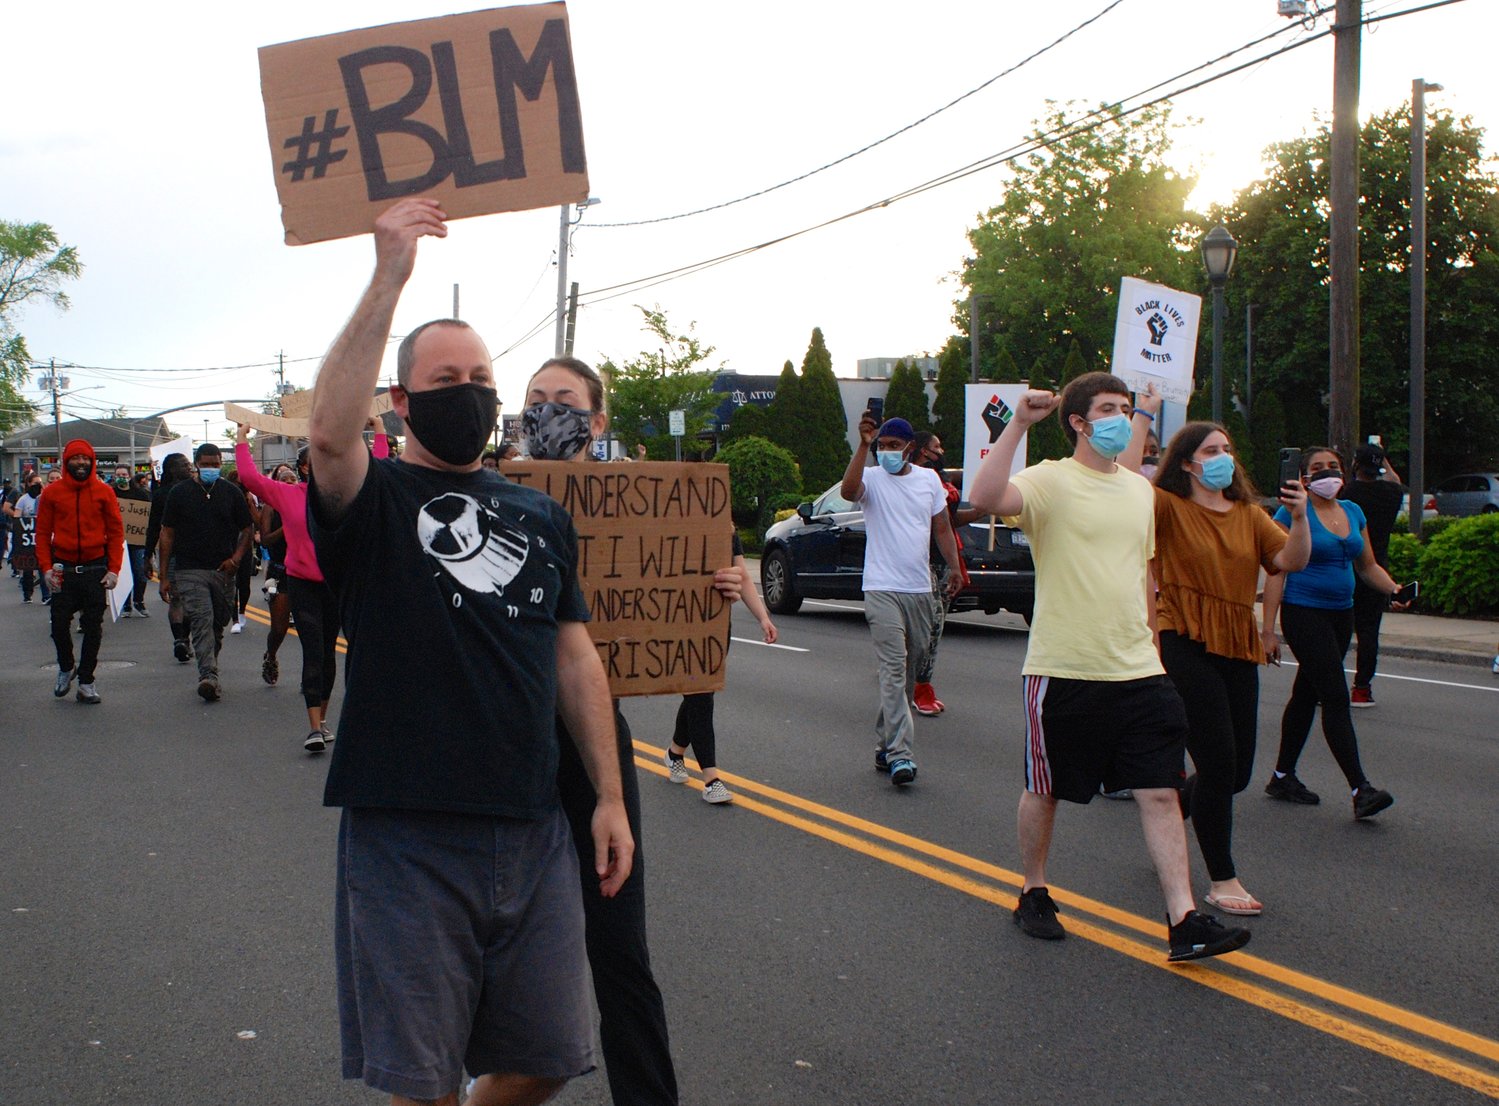 Many marchers brandished Black Lives Matter posters.